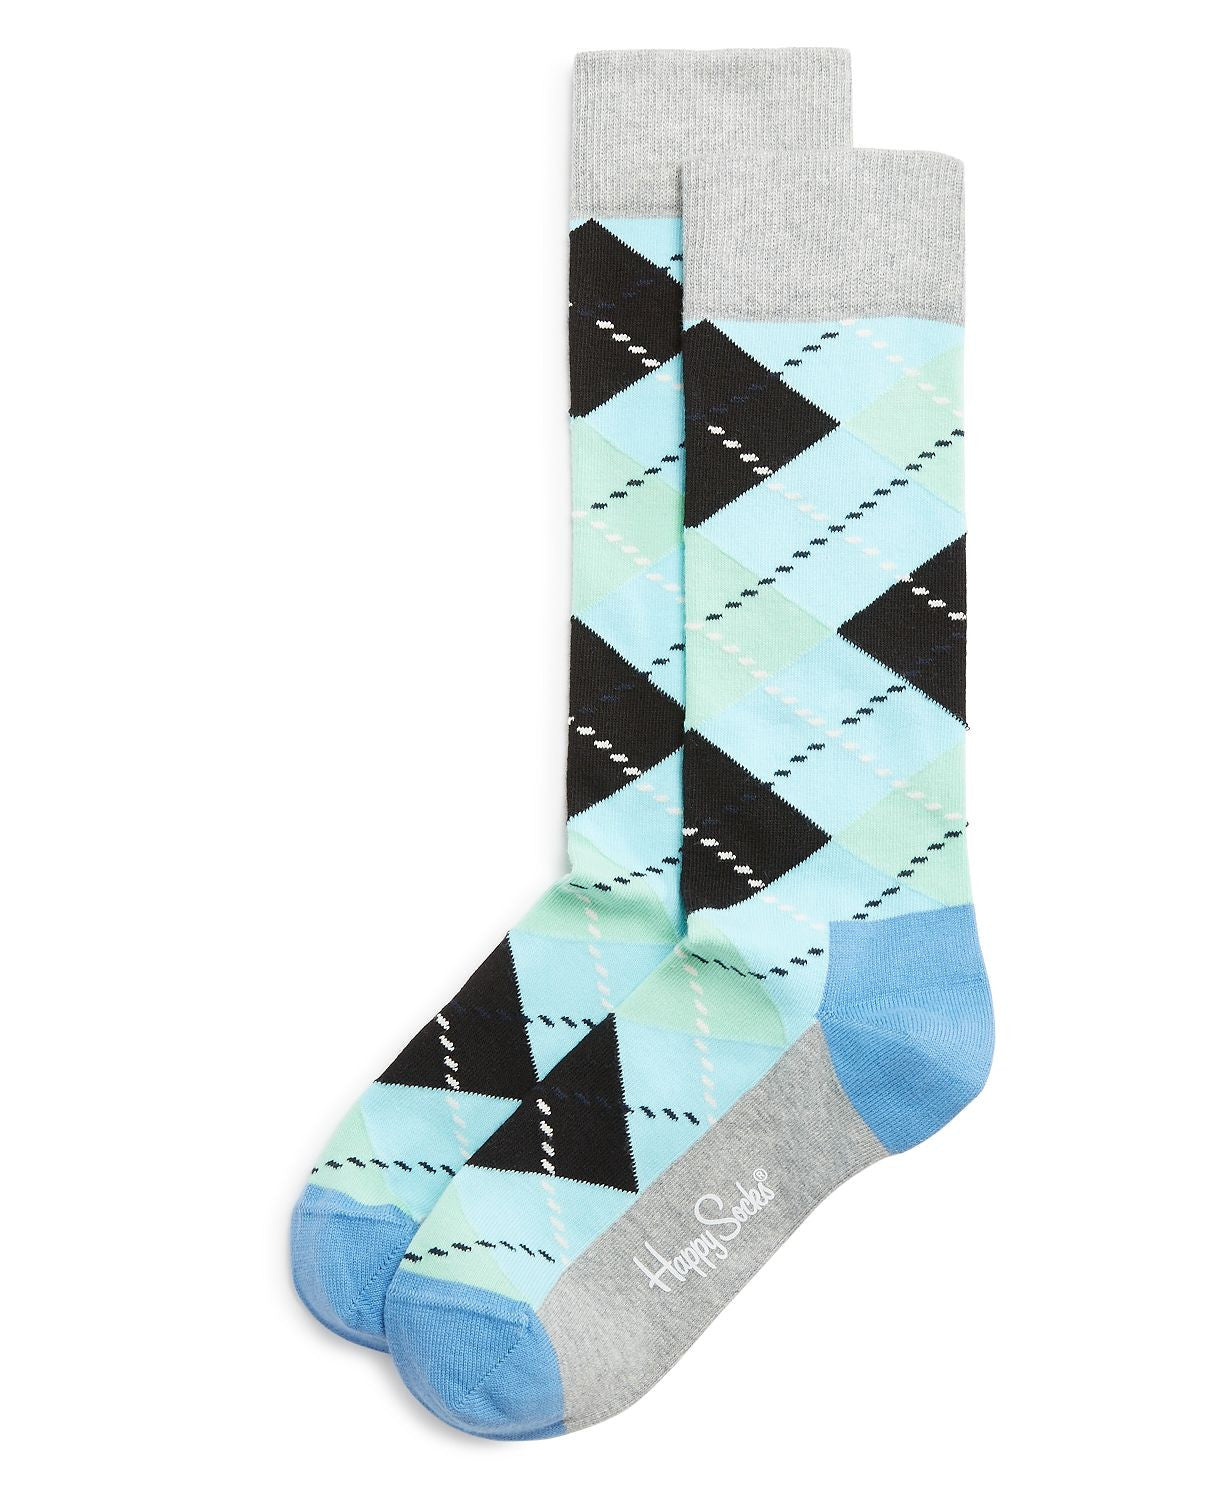 Happy Socks Argyle Socks Gray/blue